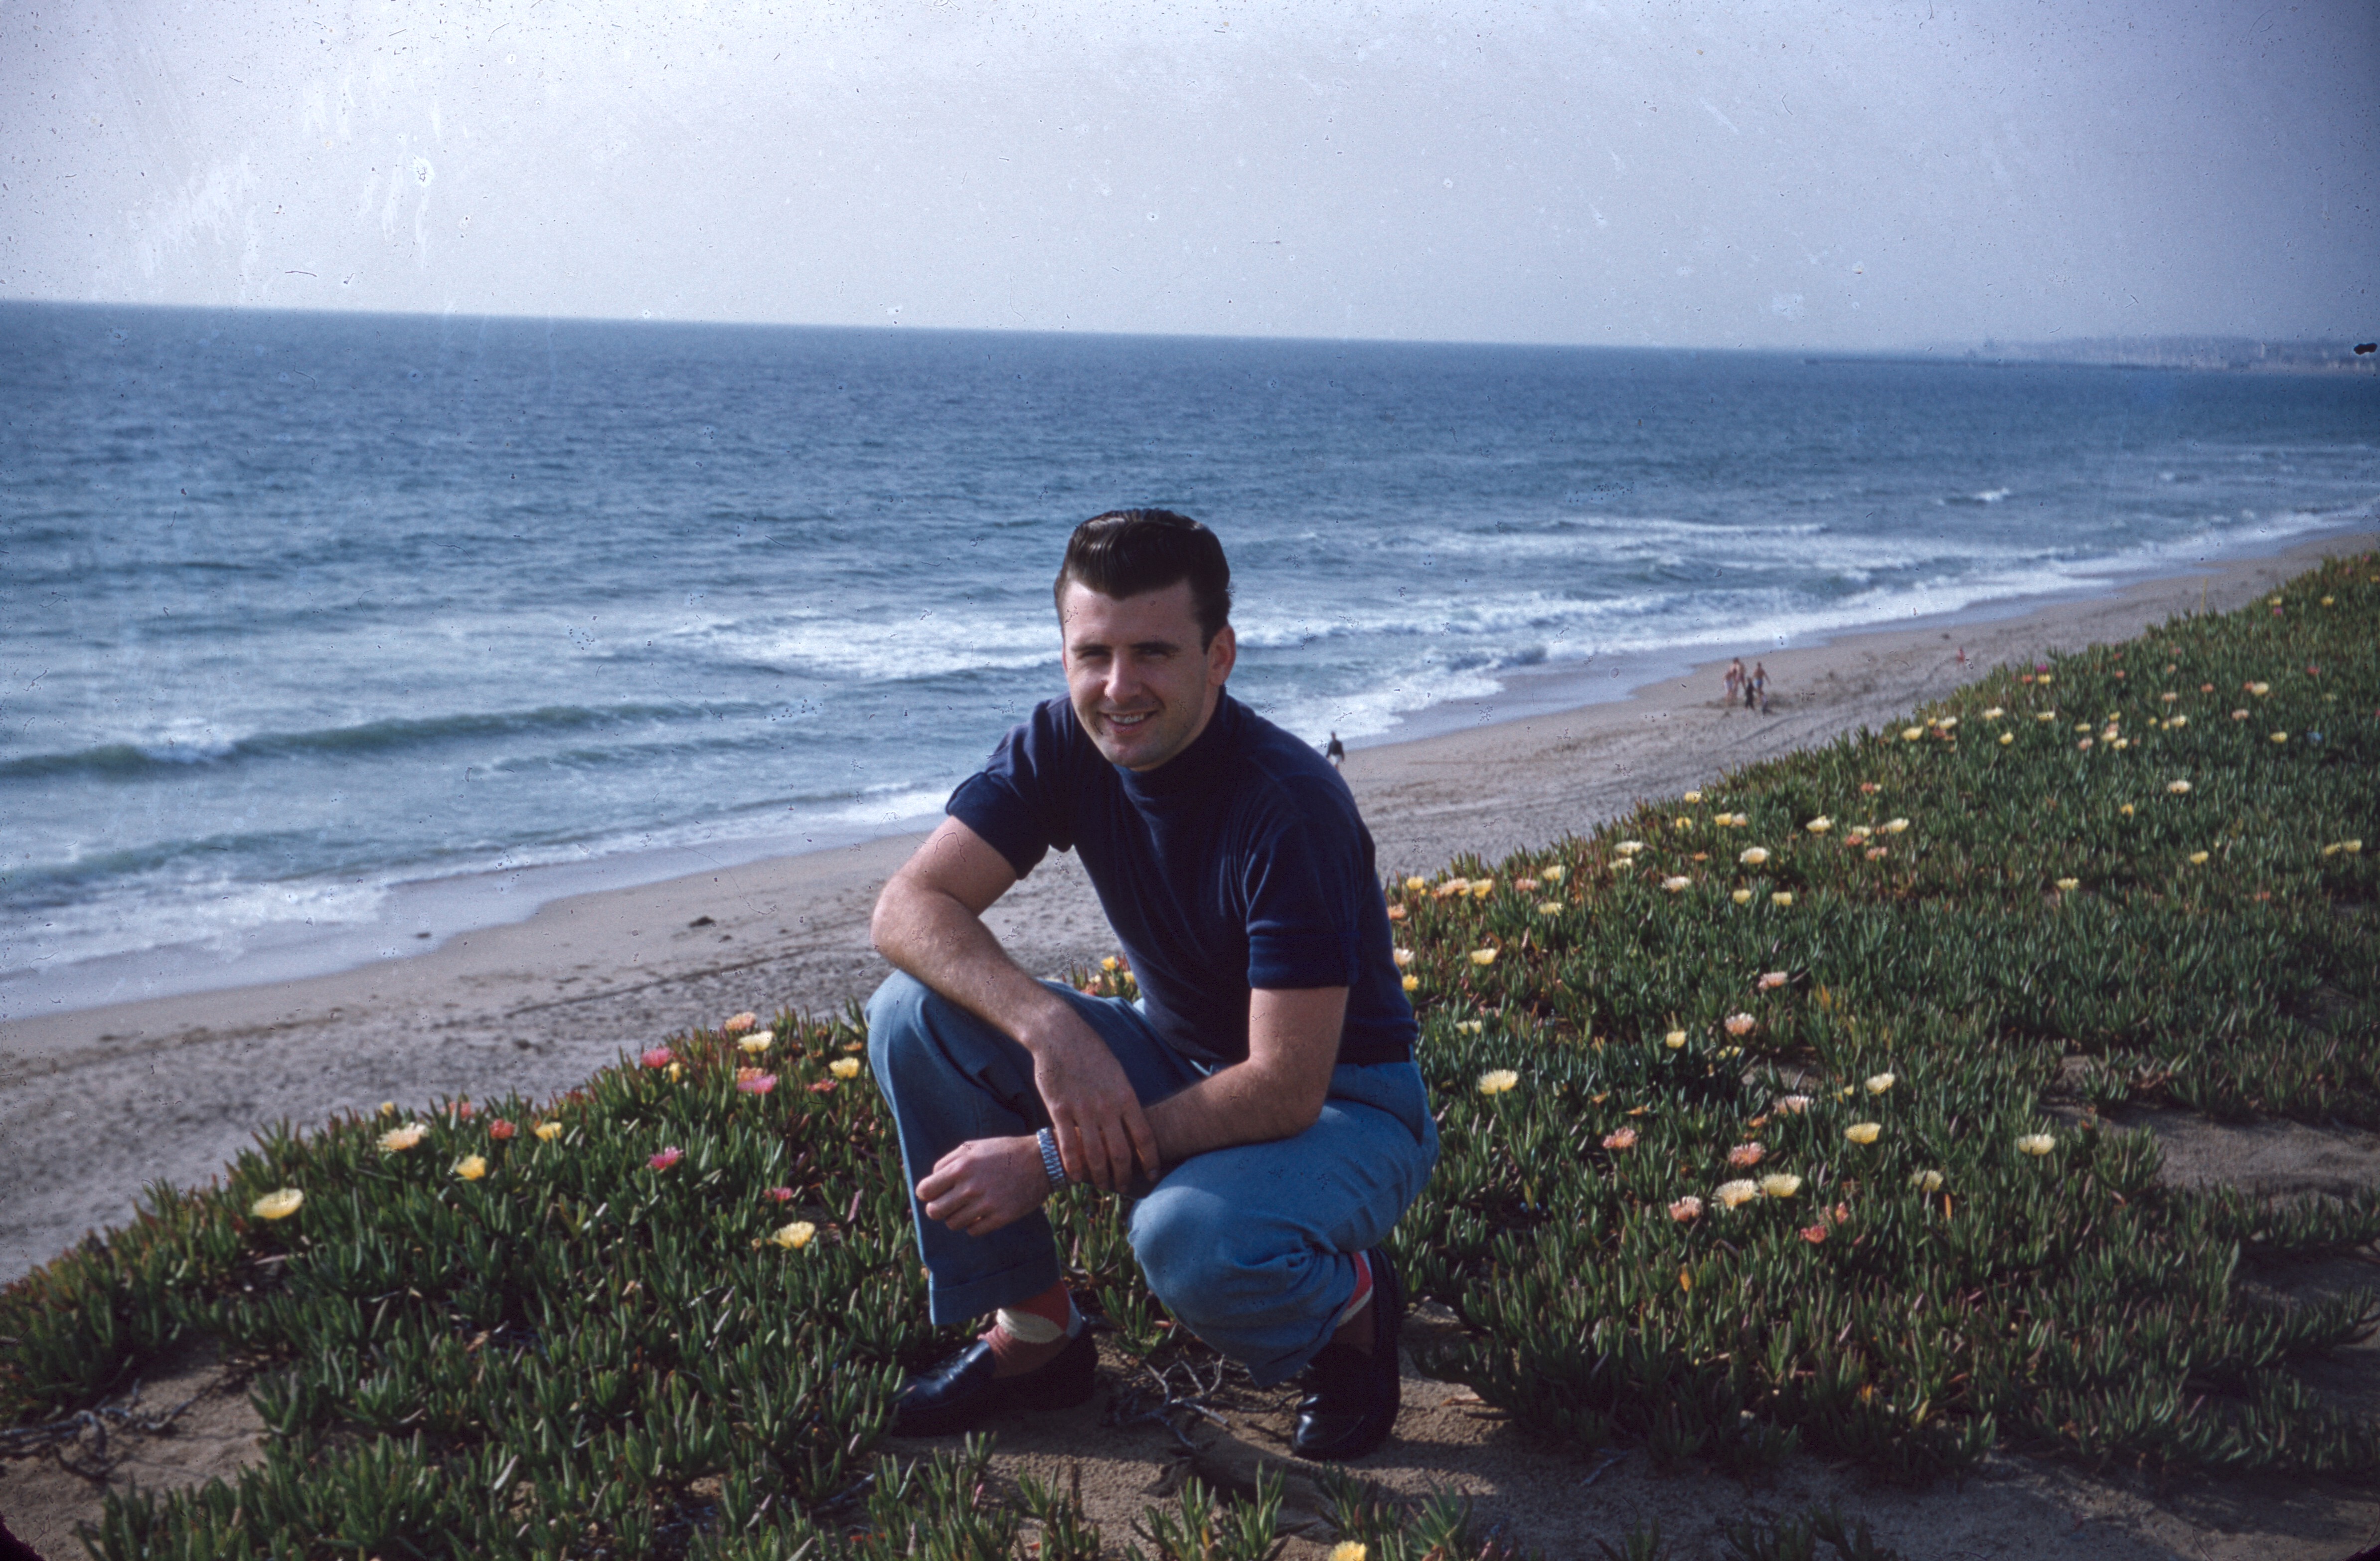 Wayne, Redondo Beach, California April 1956